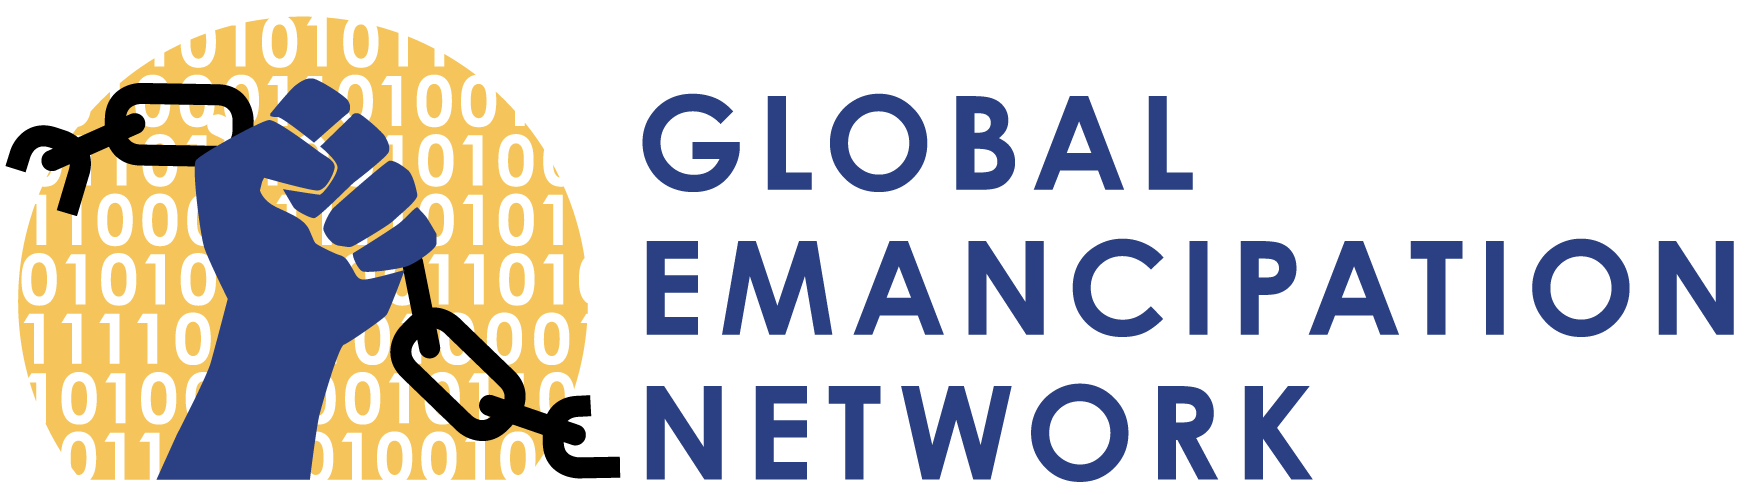 global emancipation network logo